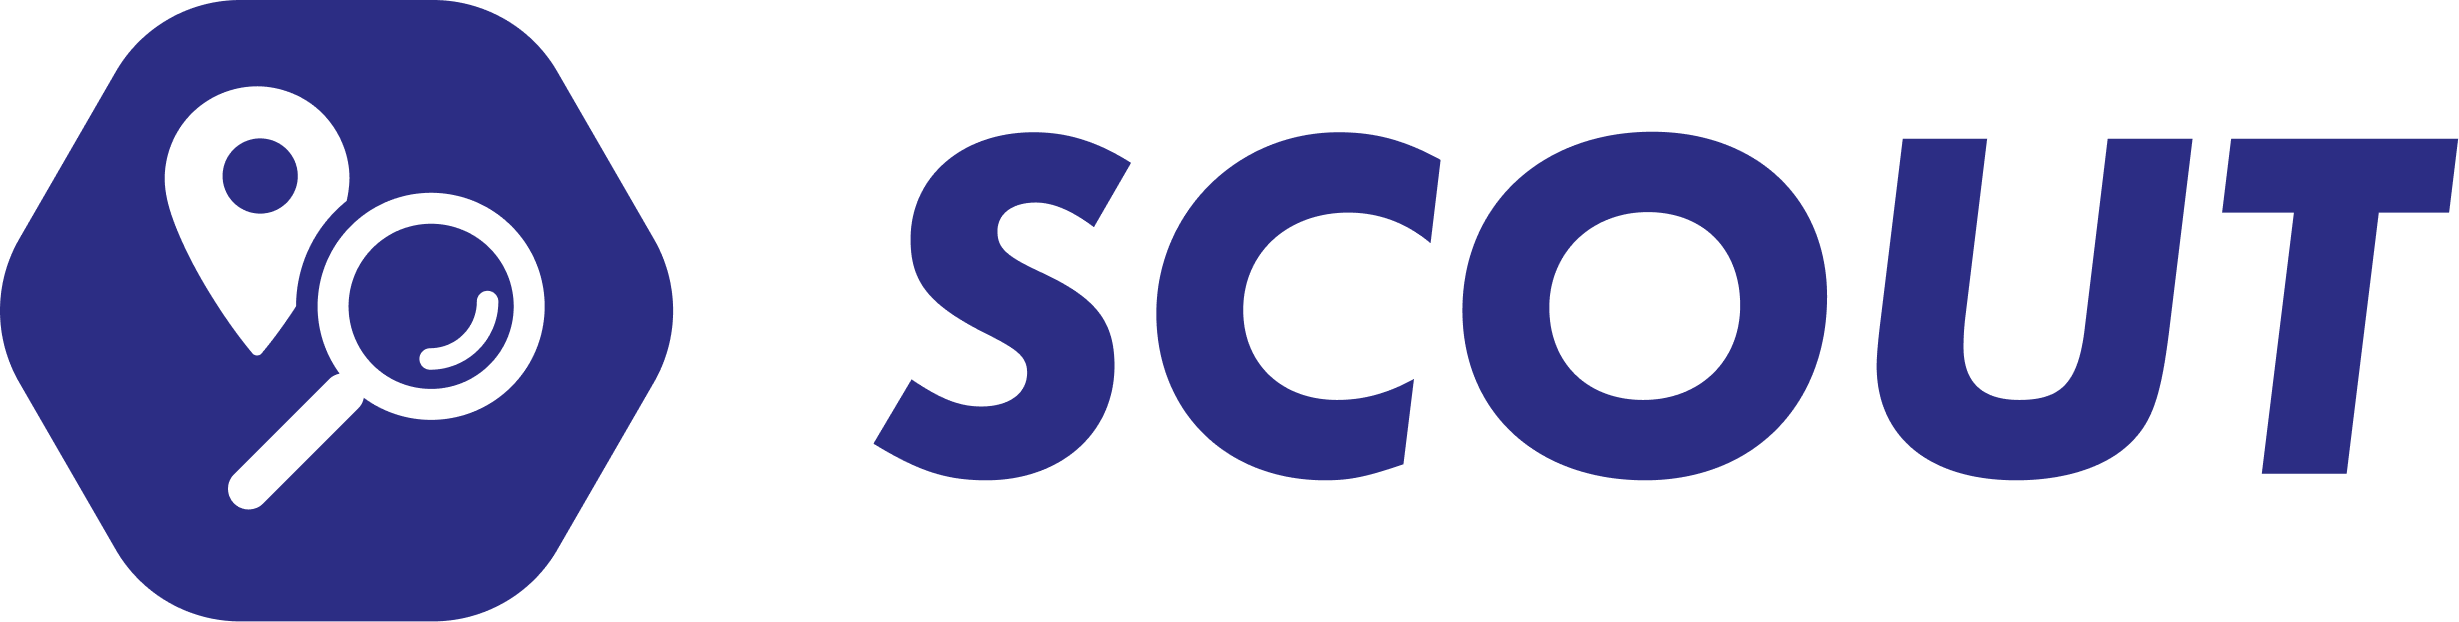 logo-scout-main.png